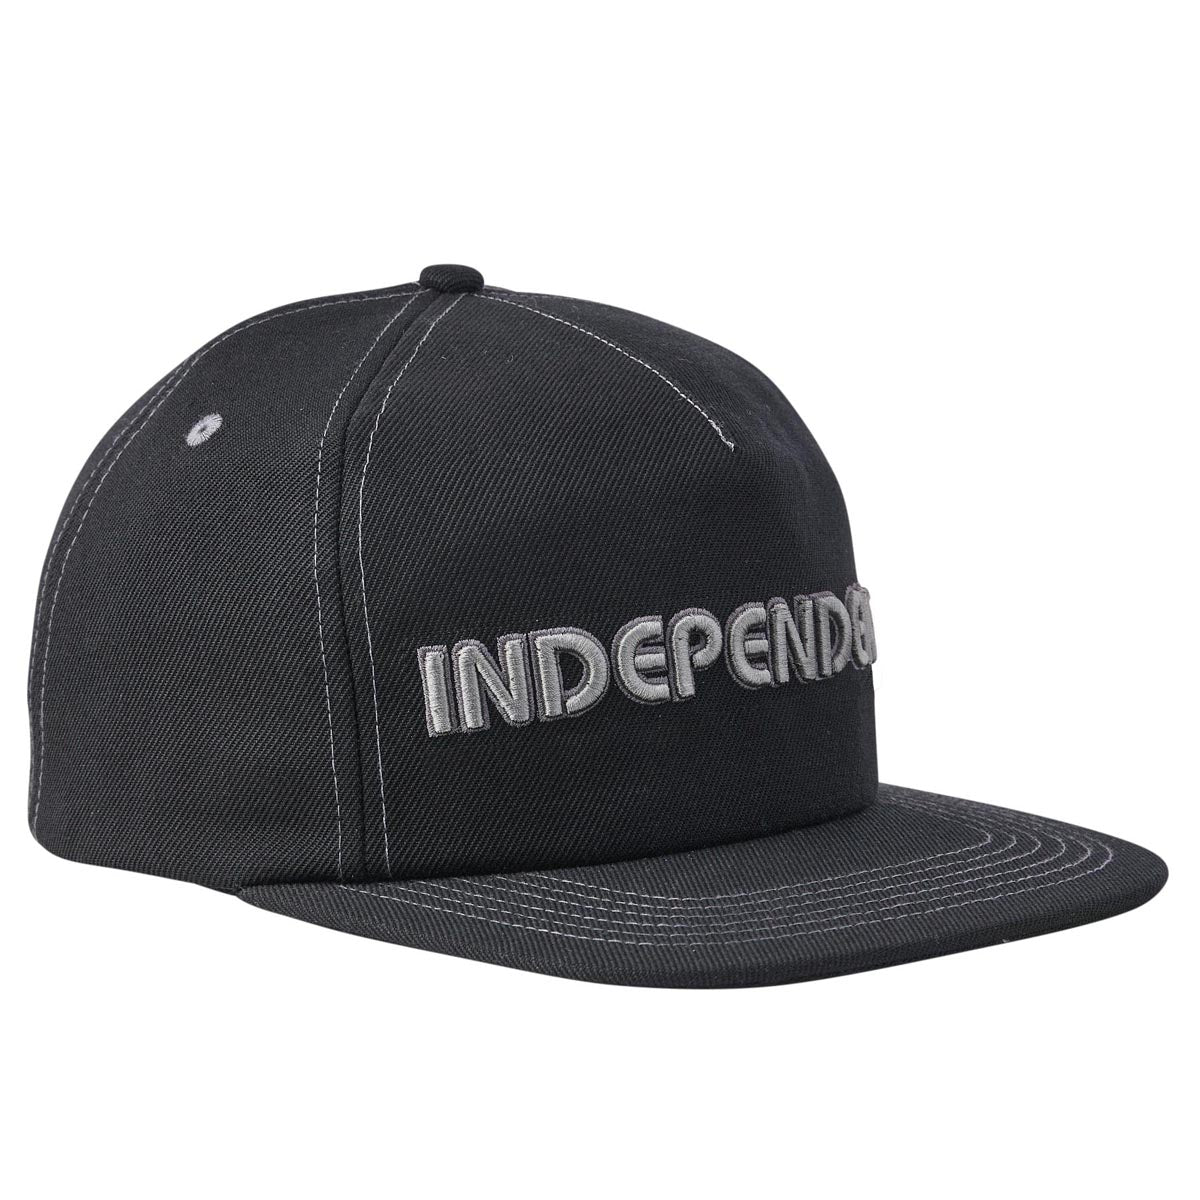 Independent Groundwork Snapback Unstructured Hat - Black image 2